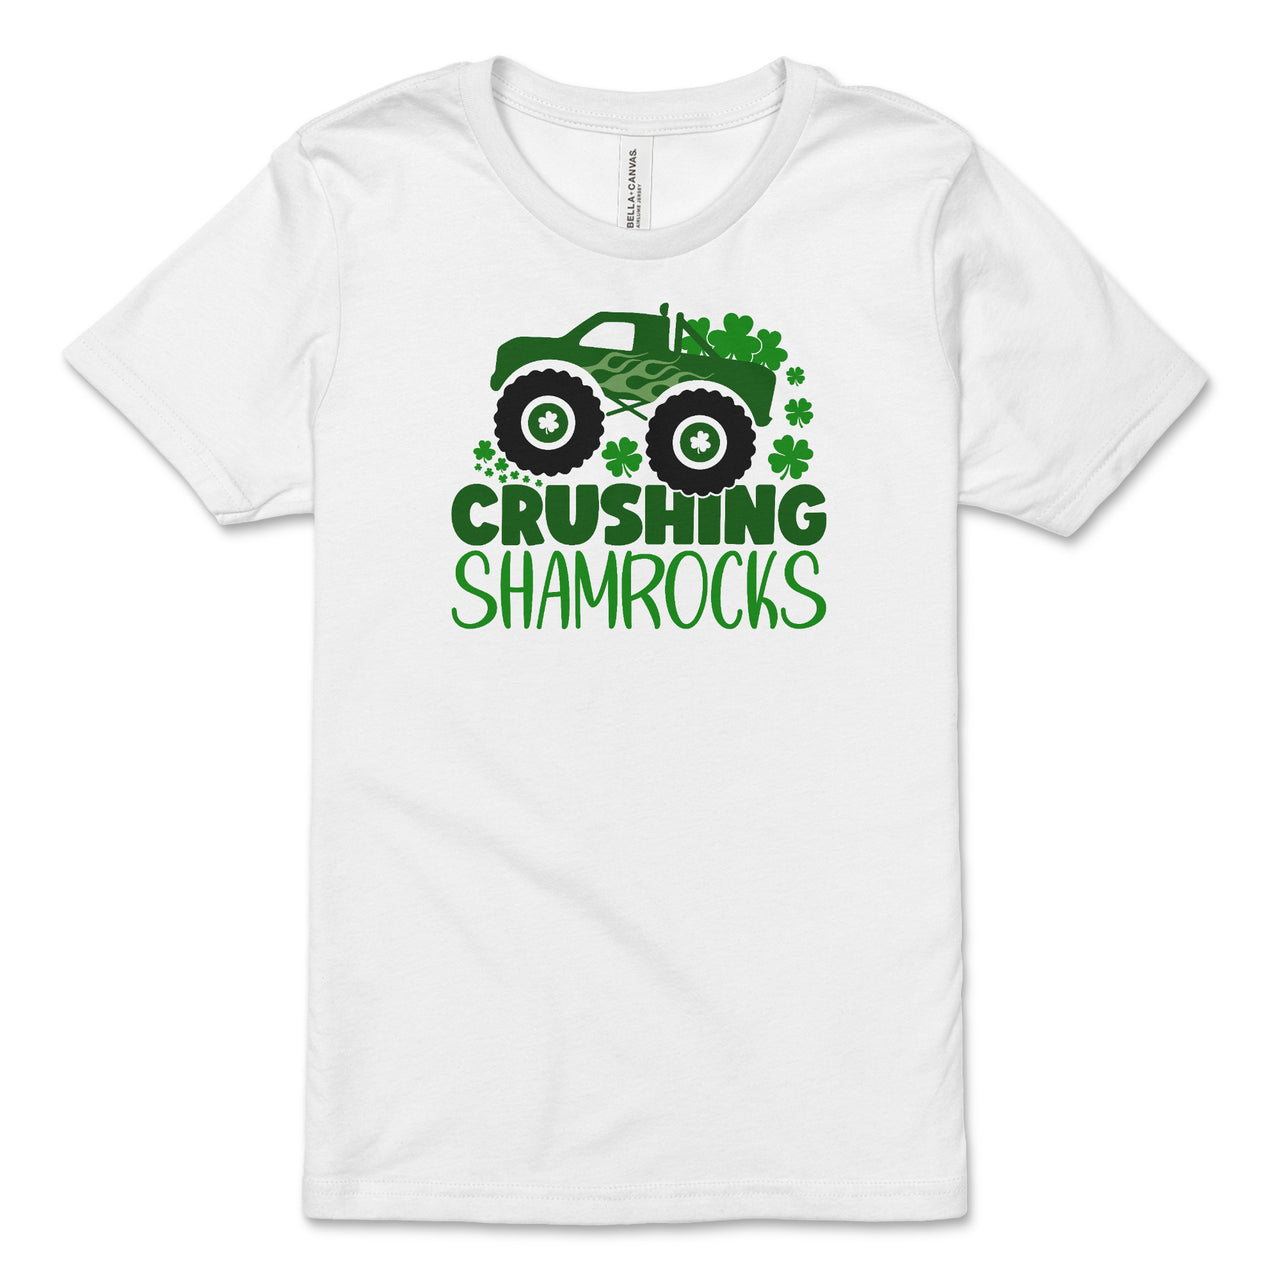 Crushing Shamrocks T-Shirt - Kids St. Patrick's Day Shirt